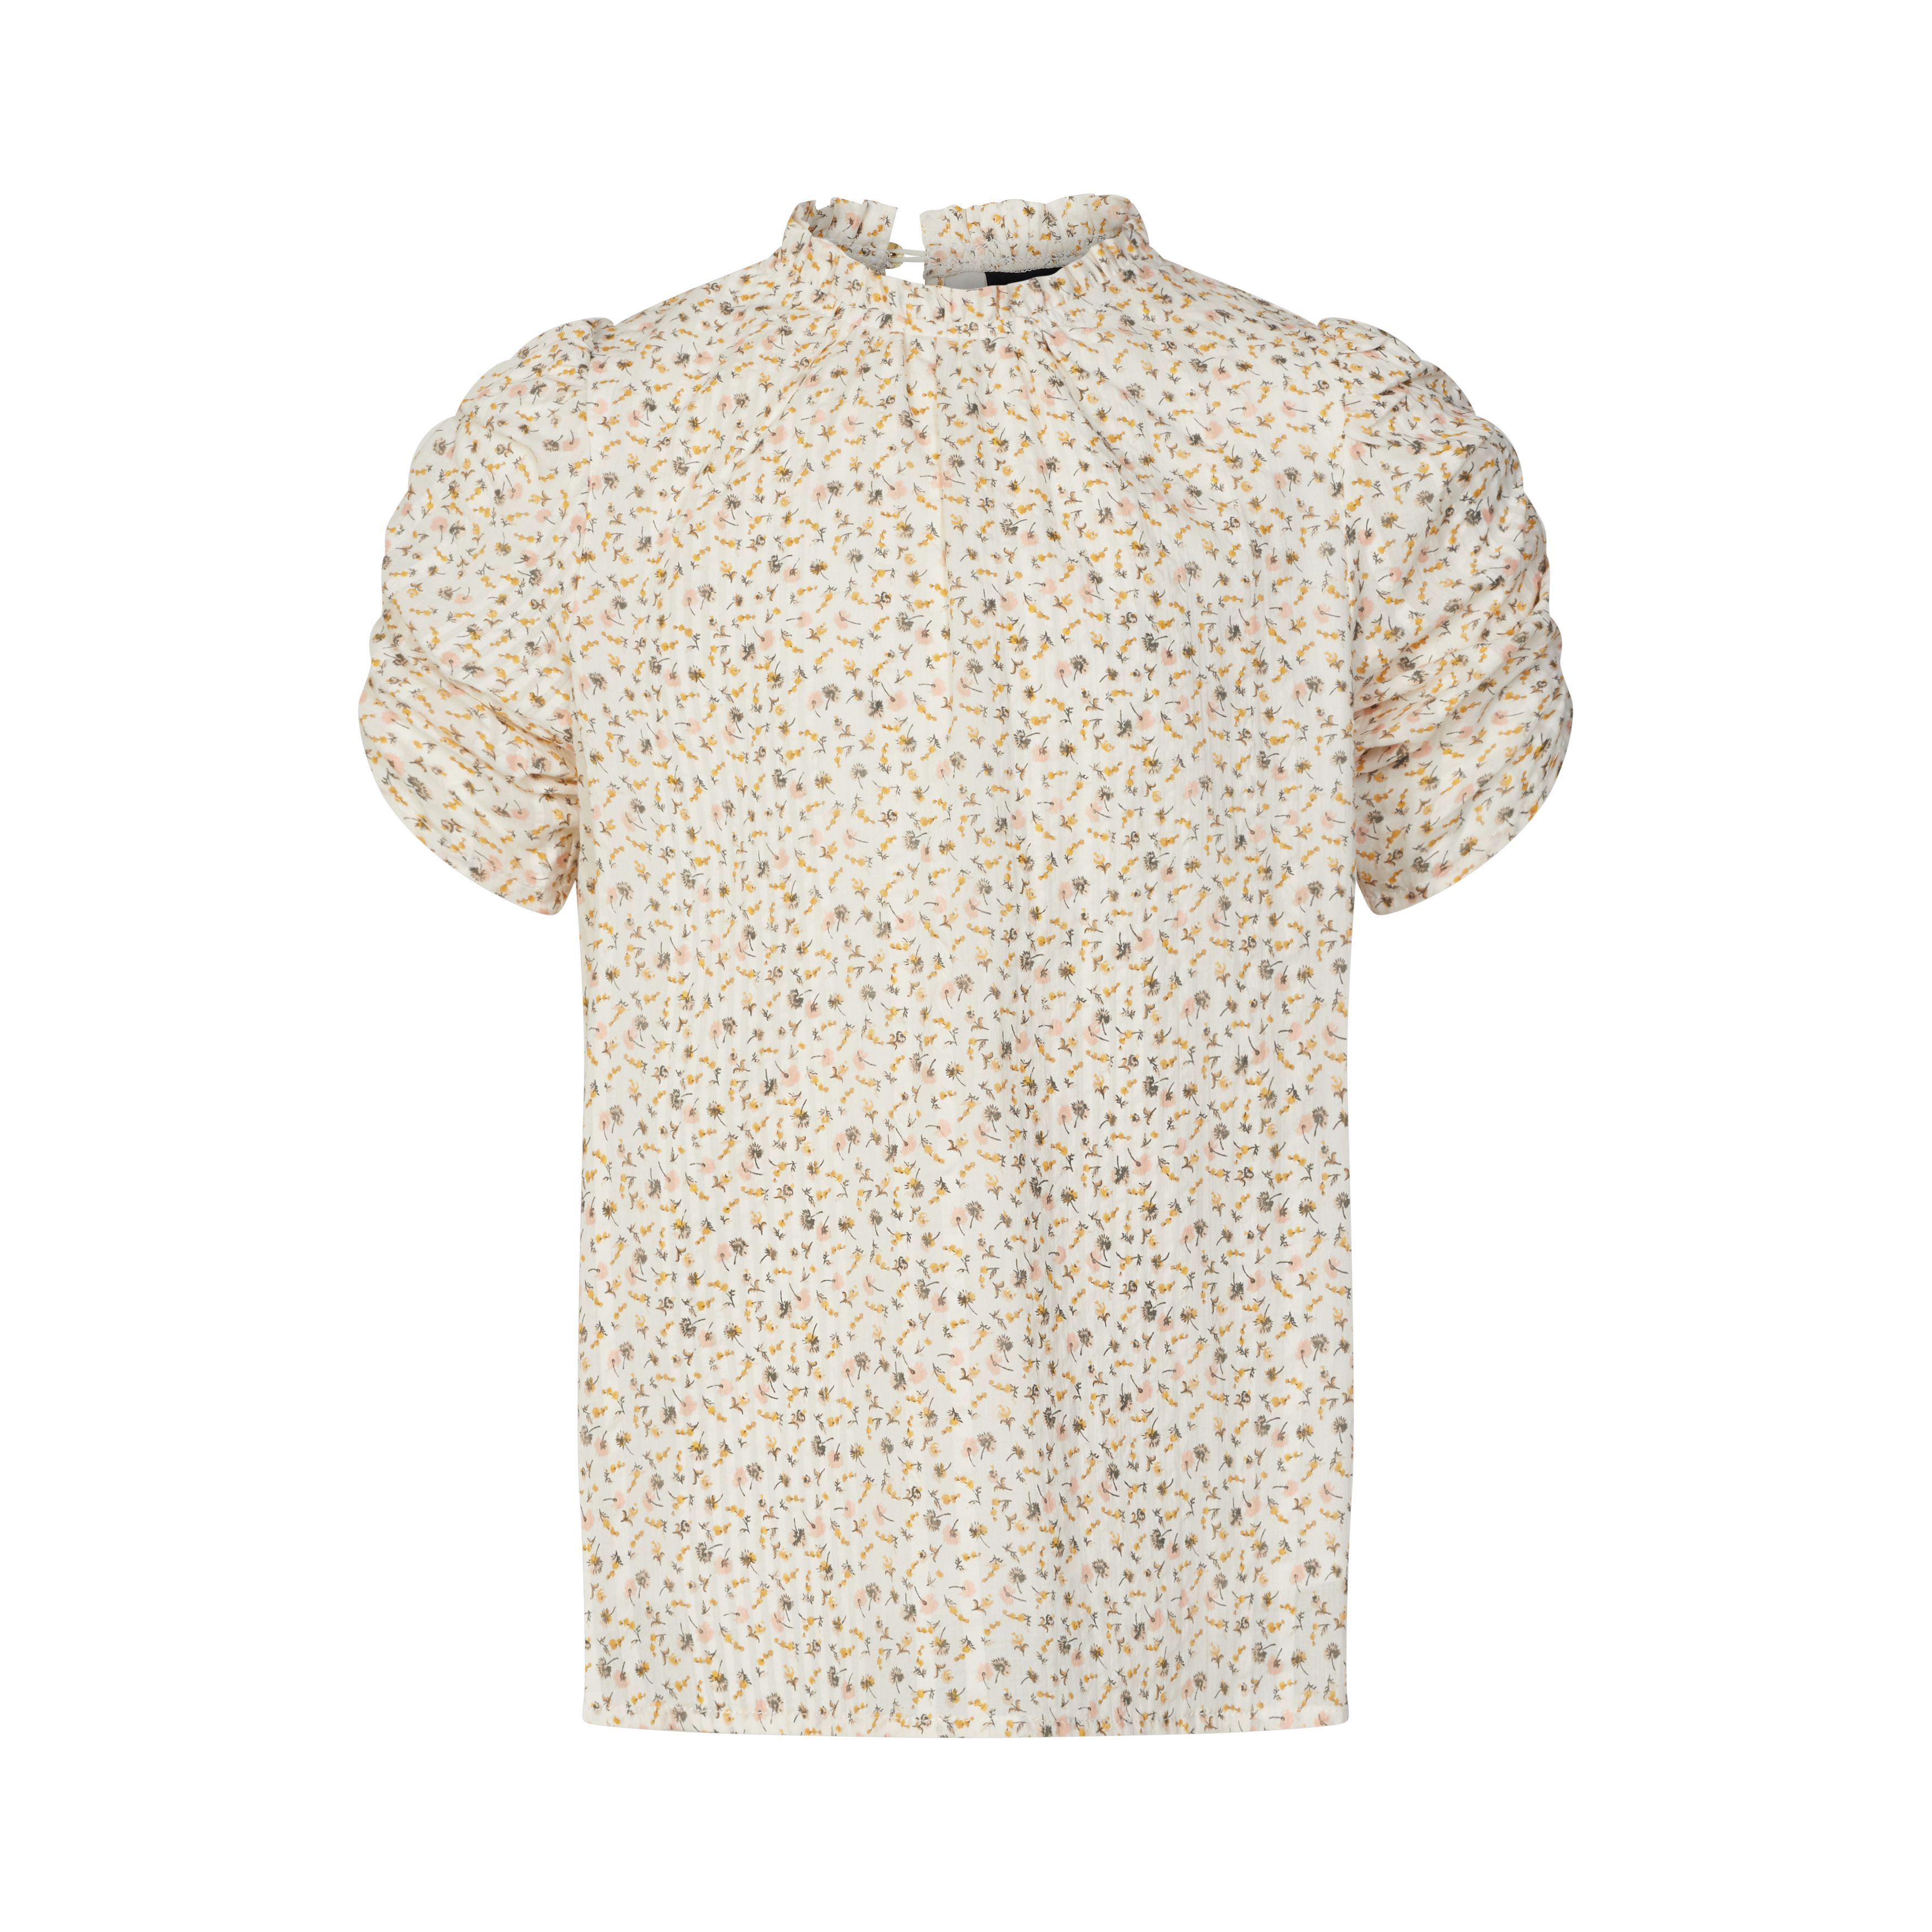 Petit by Sofie Schnoor P212235 t-shirt, flower white, 104